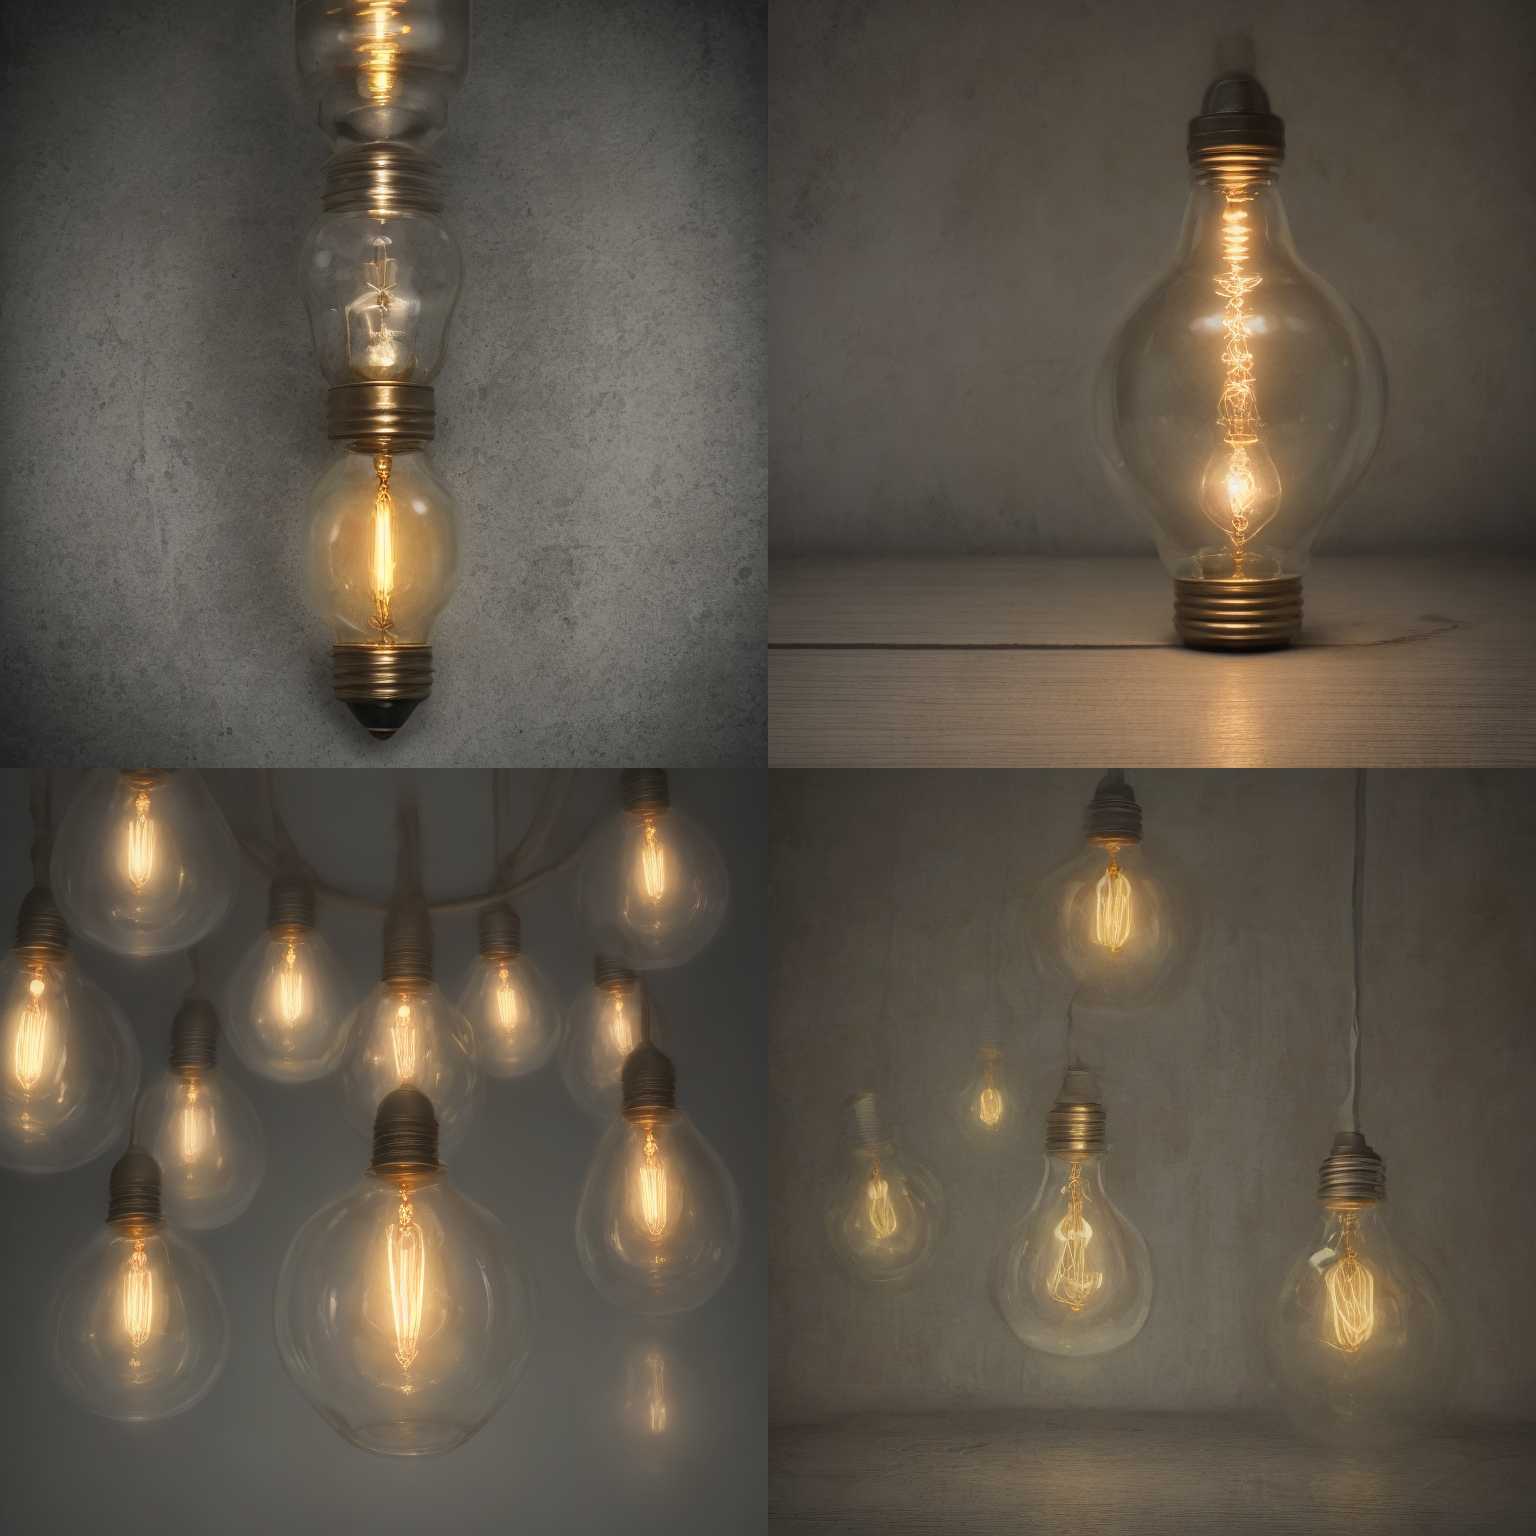 A lightbulb that's on